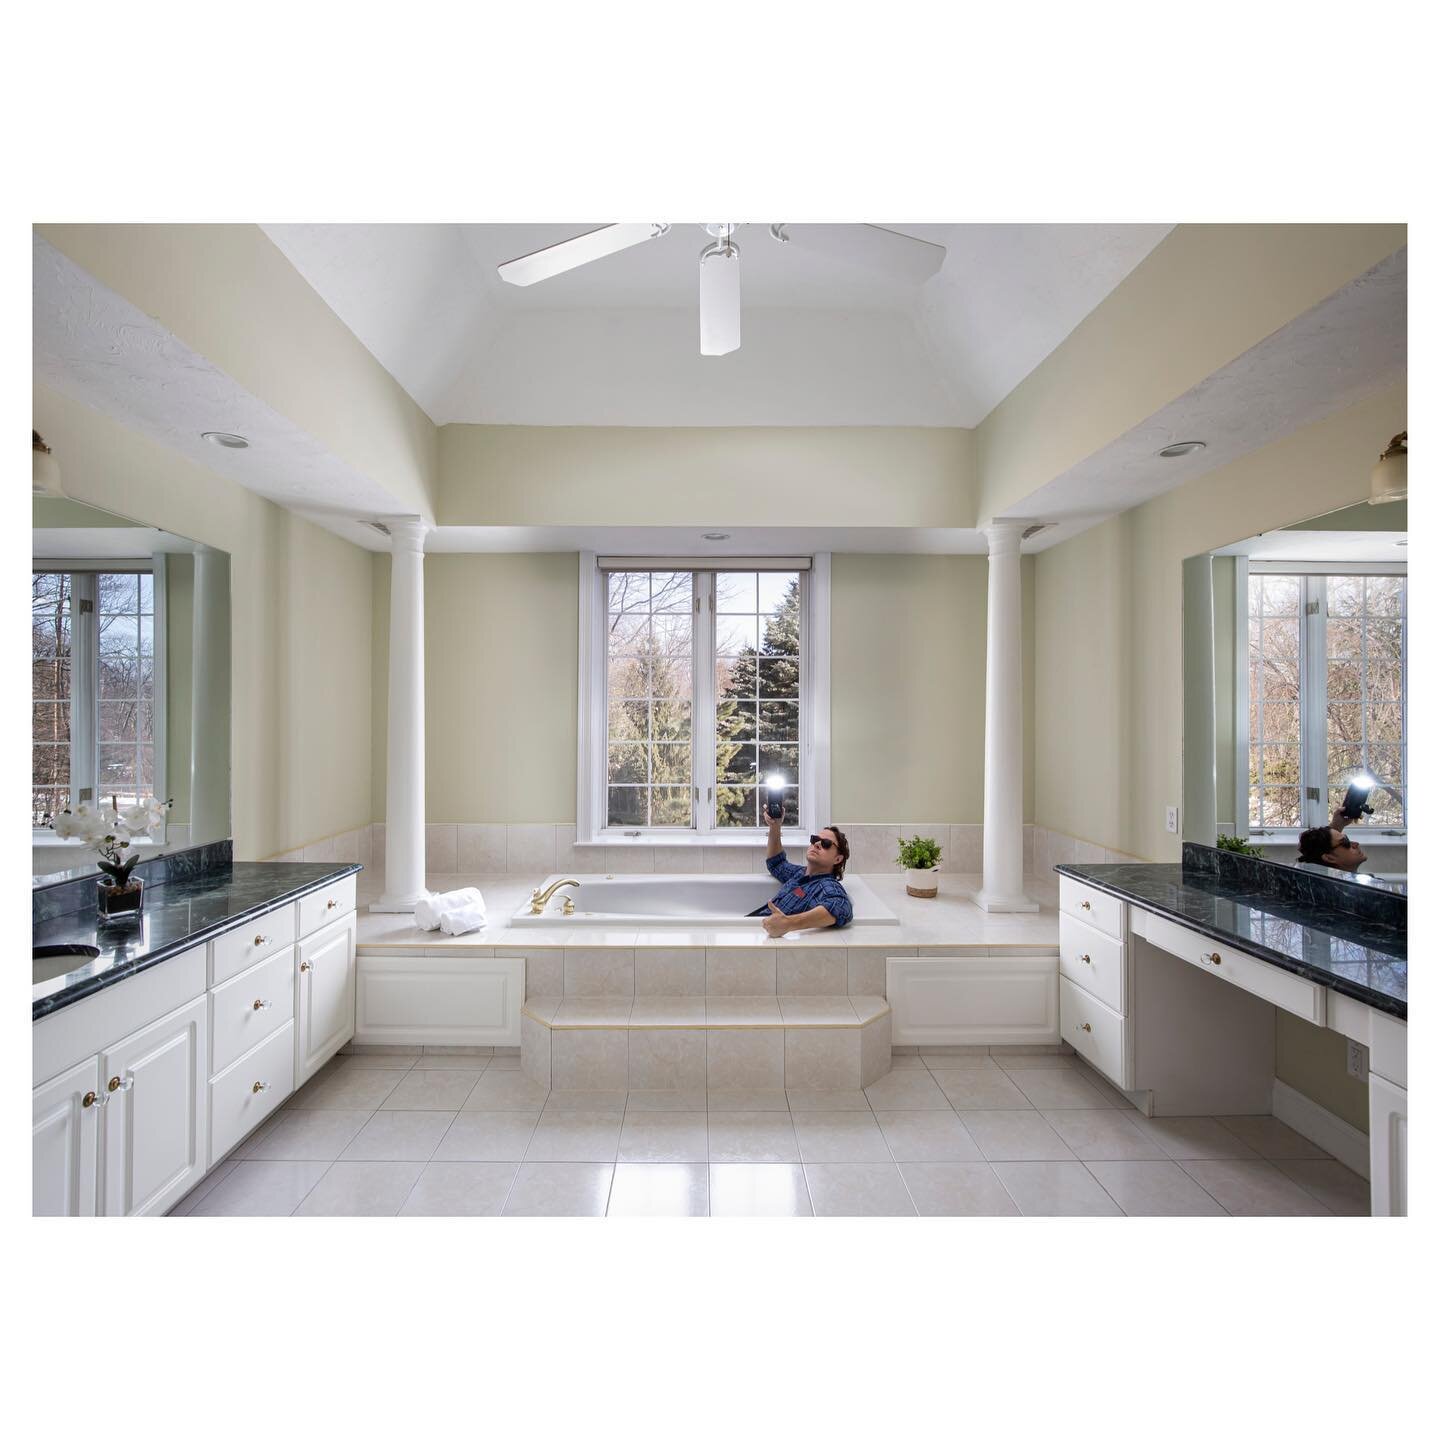 Back by popular demand: Bathtub Flash Guy! 💥 🛀🏼 💥
.
.
.
.
.
.
.
.
.
.
#photography #interior #interiors #architecture #architecturalphotography  #interiorphotography #design #style #mplphoto #bostonphotographer #bostoninteriorphotographer #boston